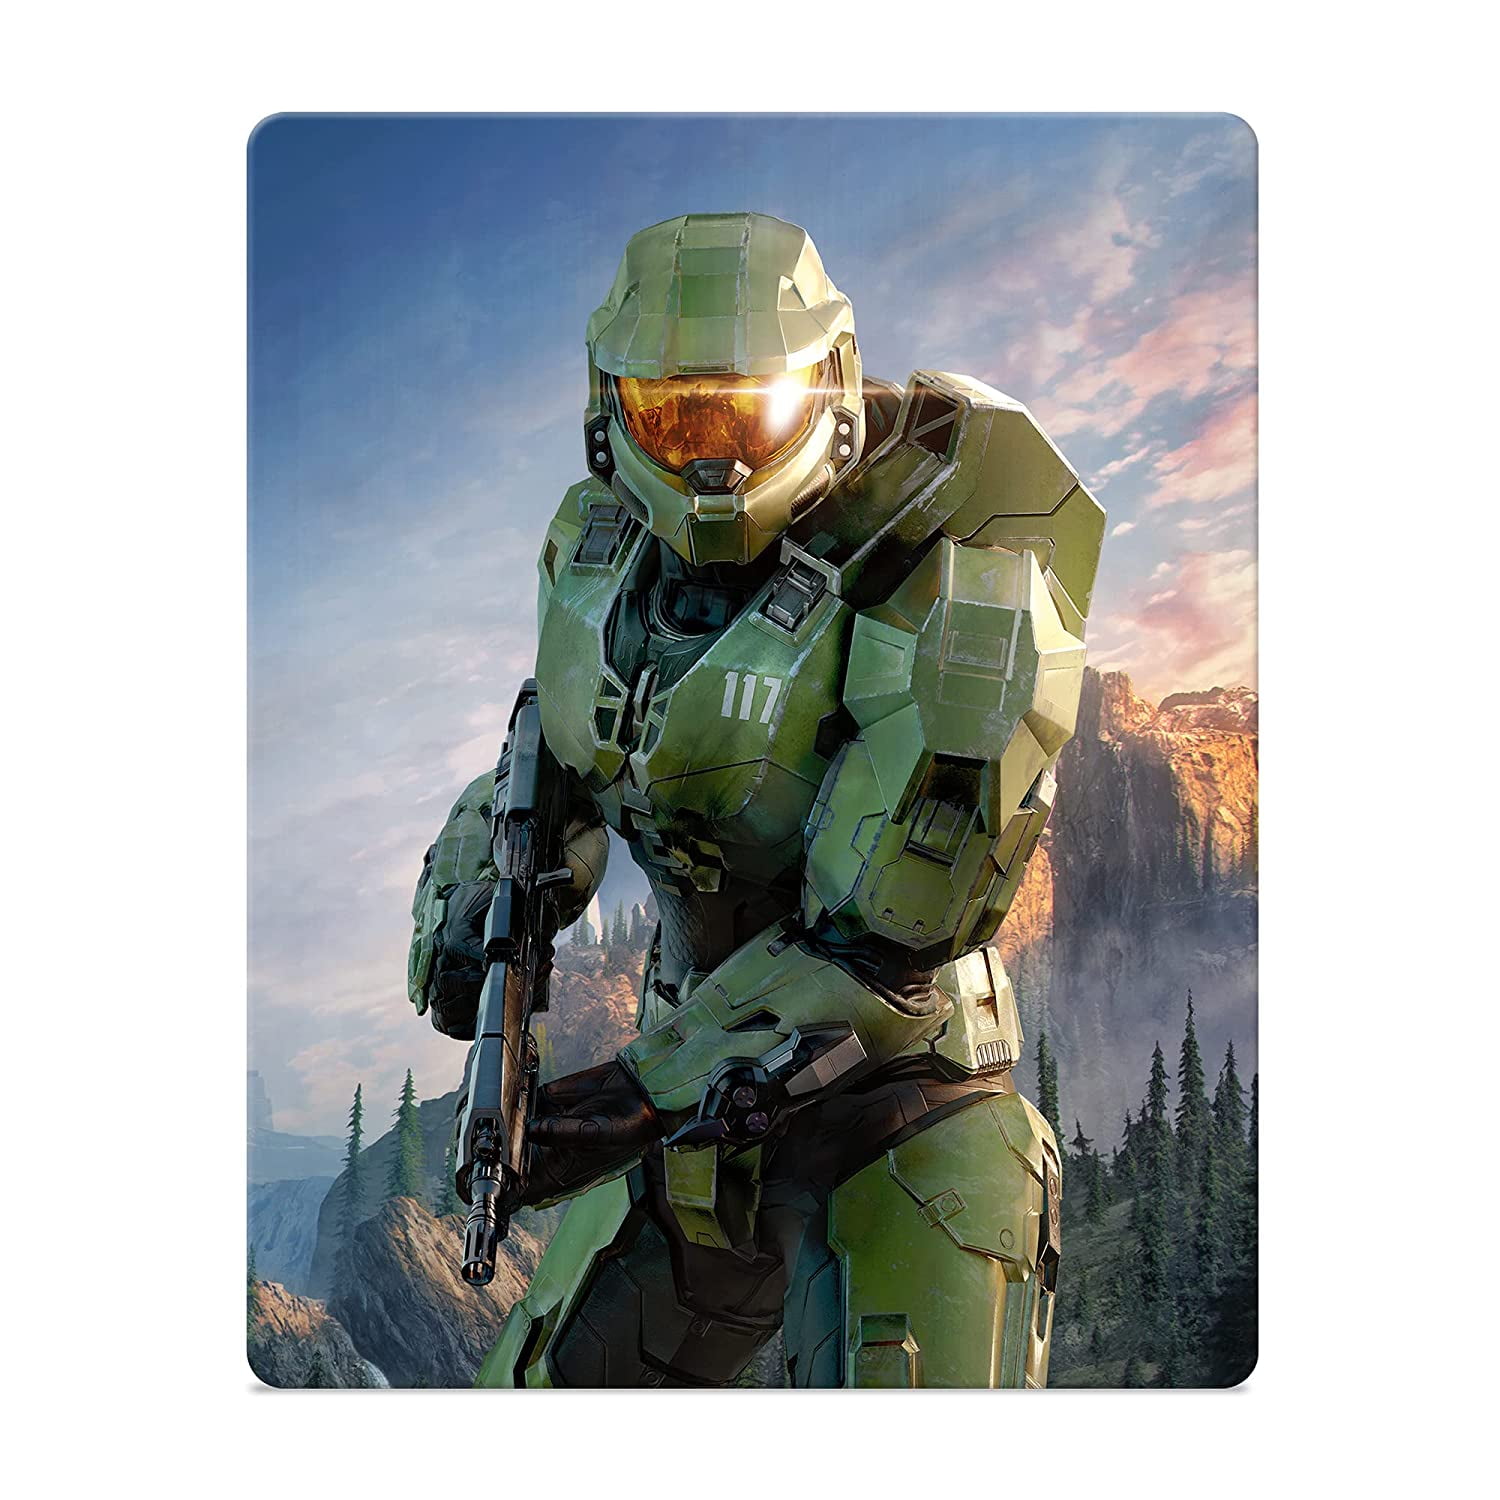  Halo Infinite Standard Edition - For Xbox One, Xbox